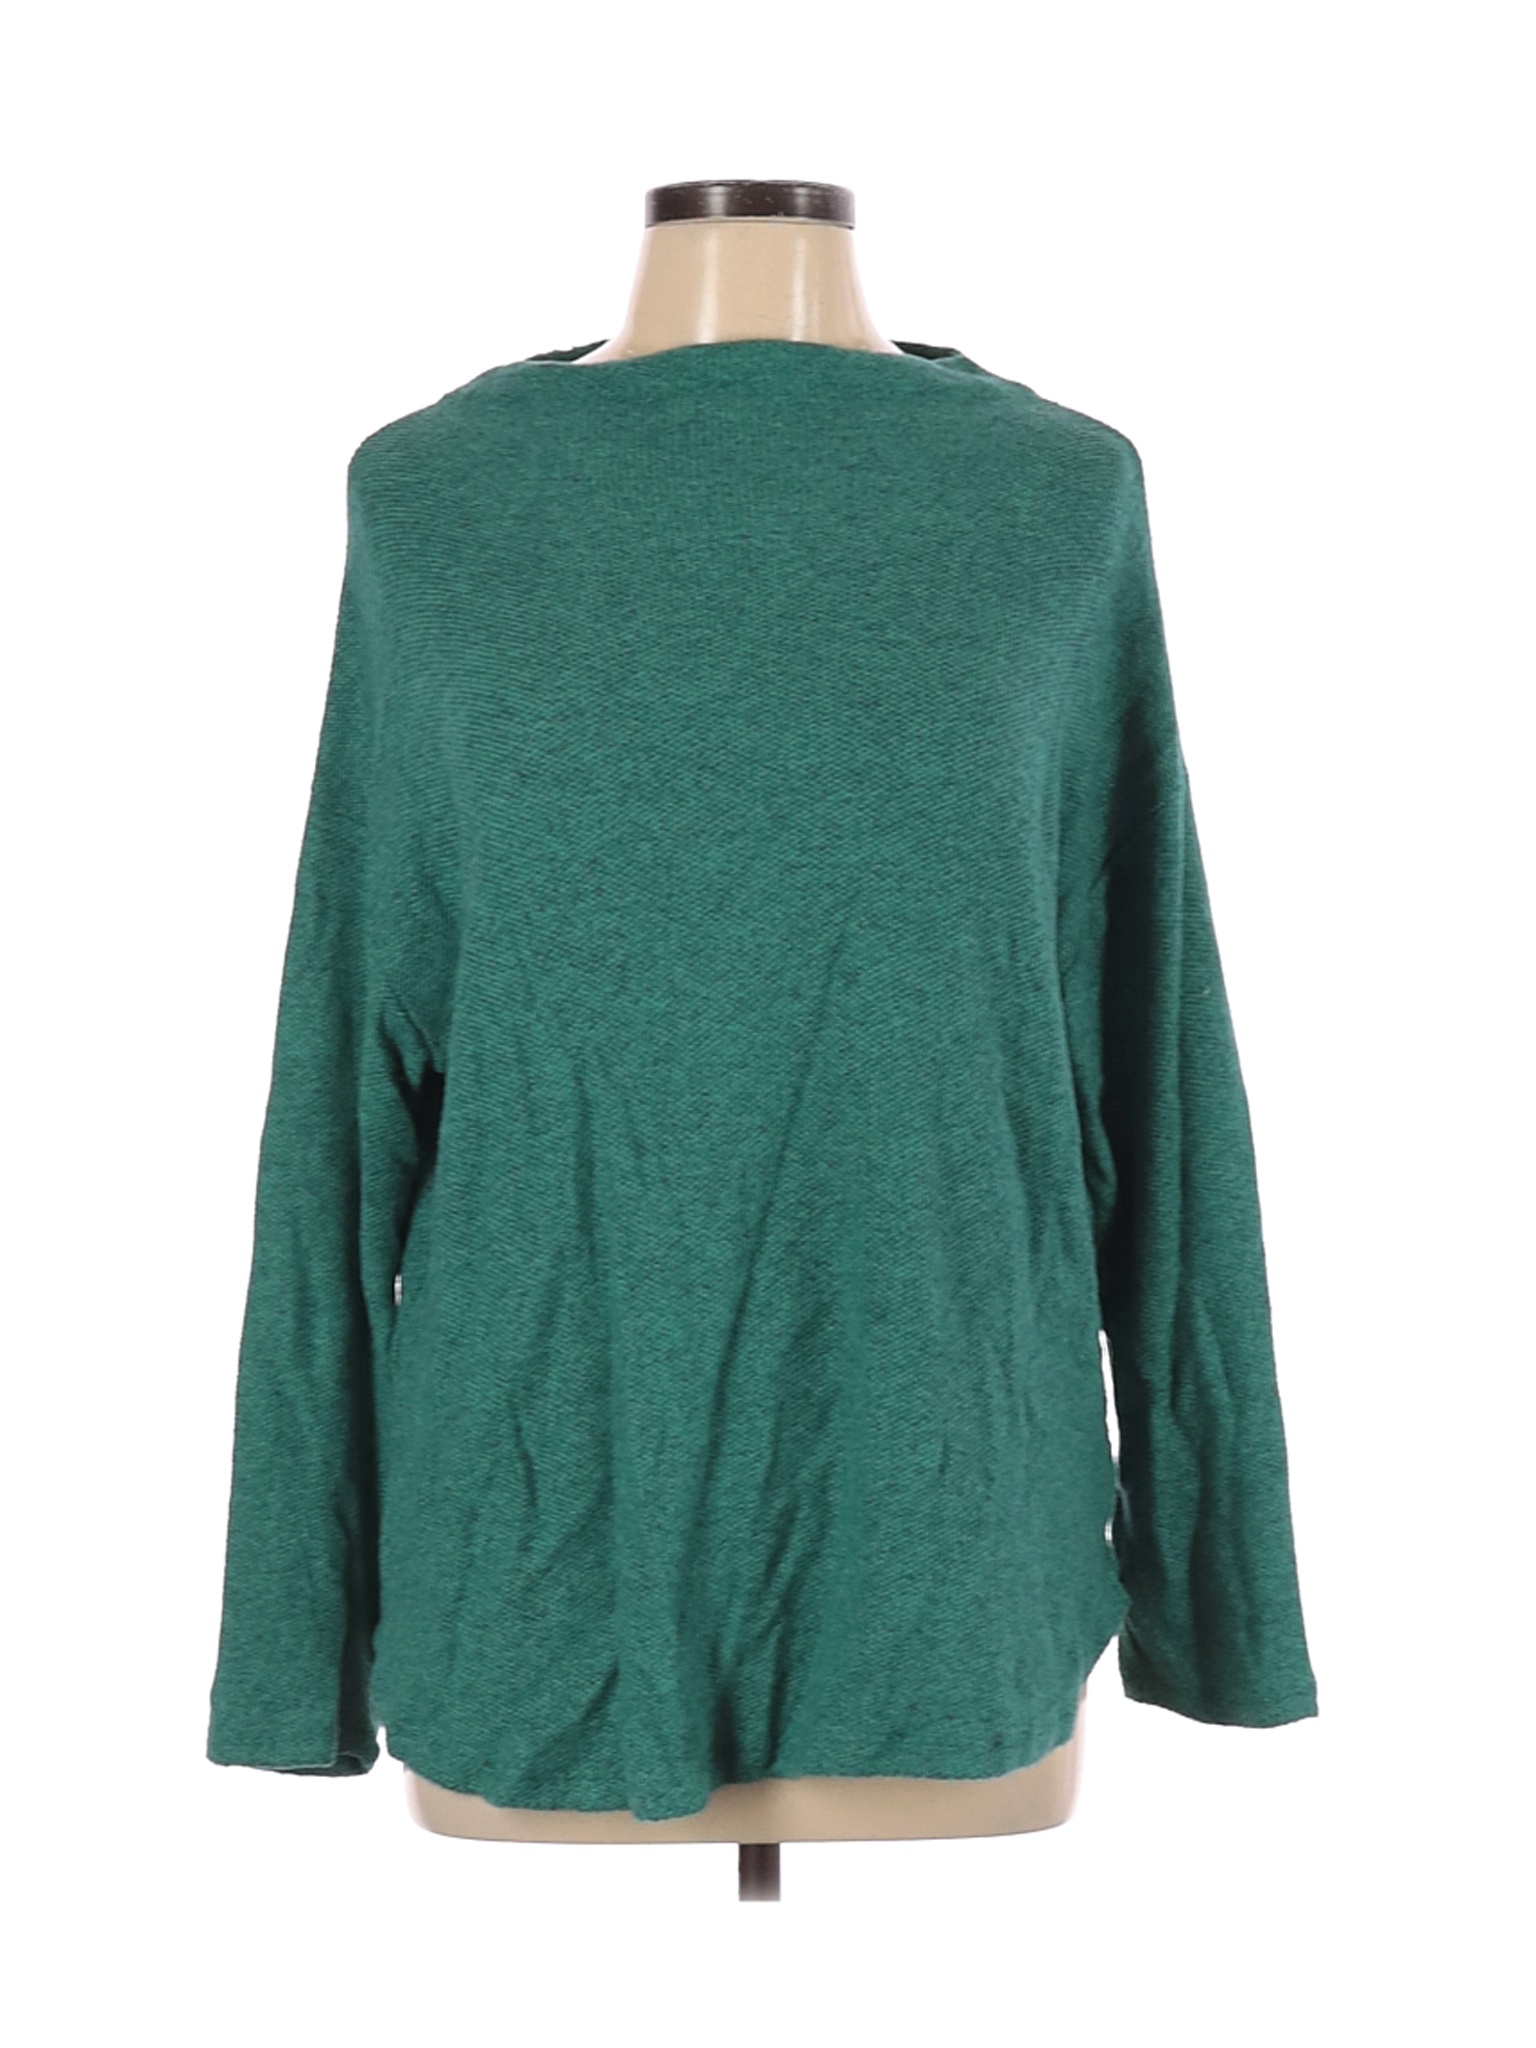 Old Navy Women Green Pullover Sweater L | eBay